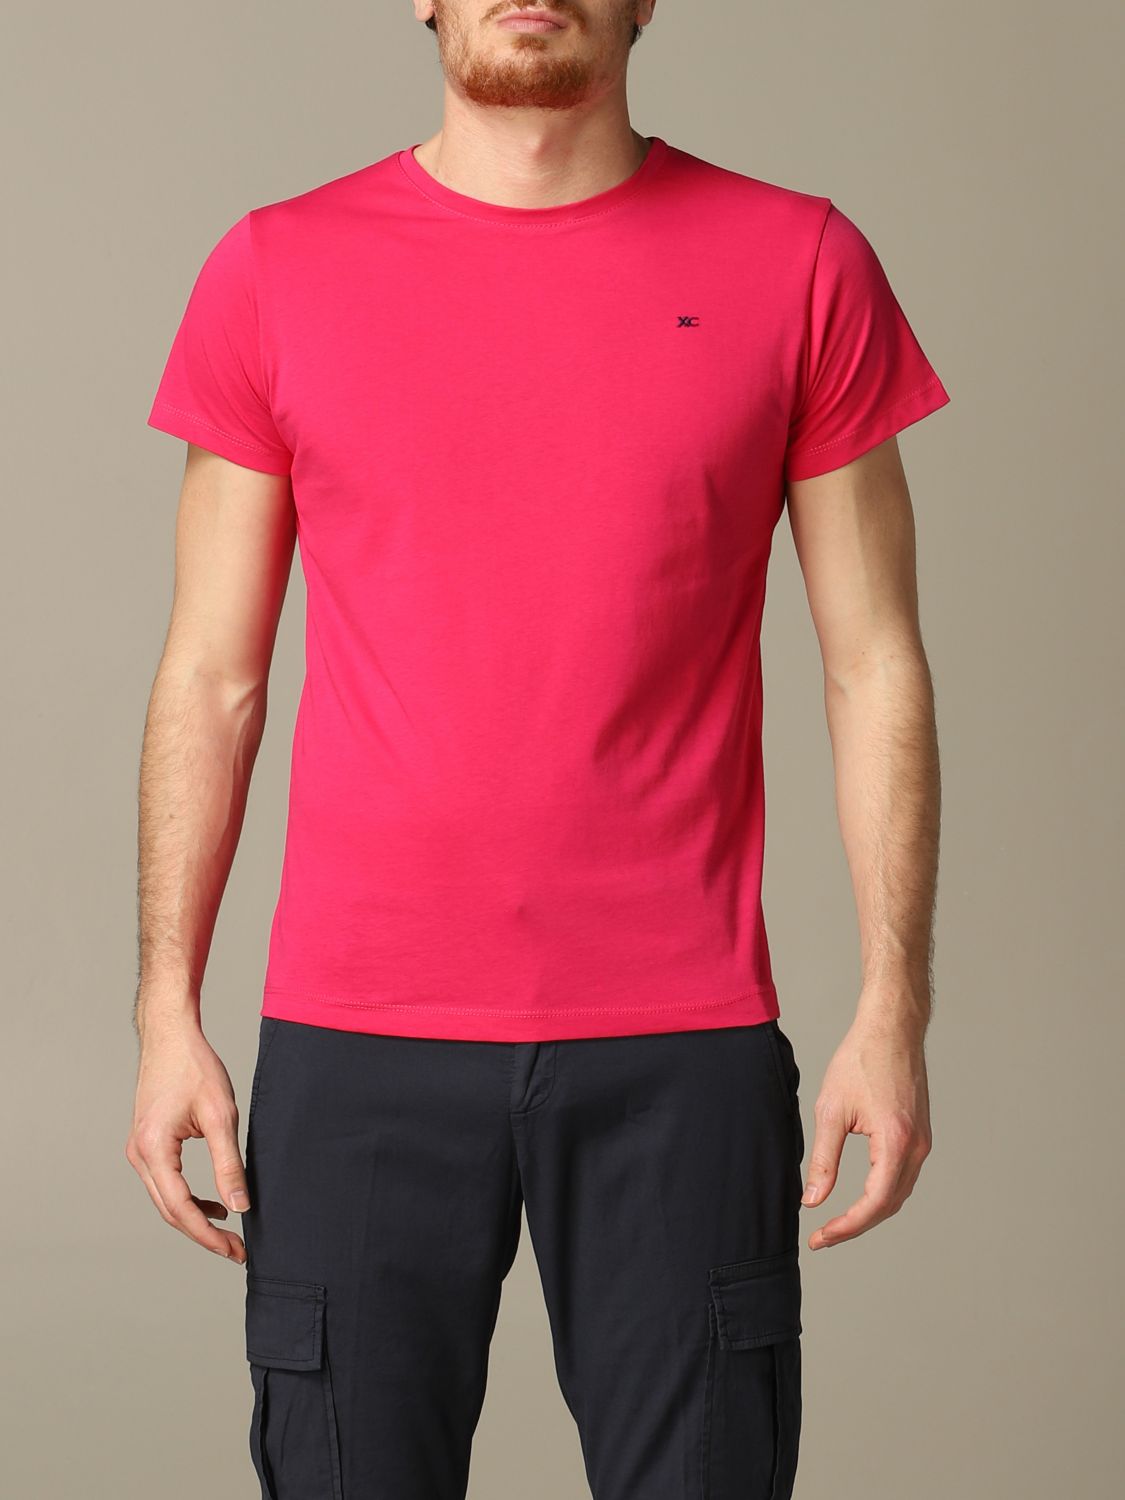 Xc T-Shirt XC Men colour Fuchsia